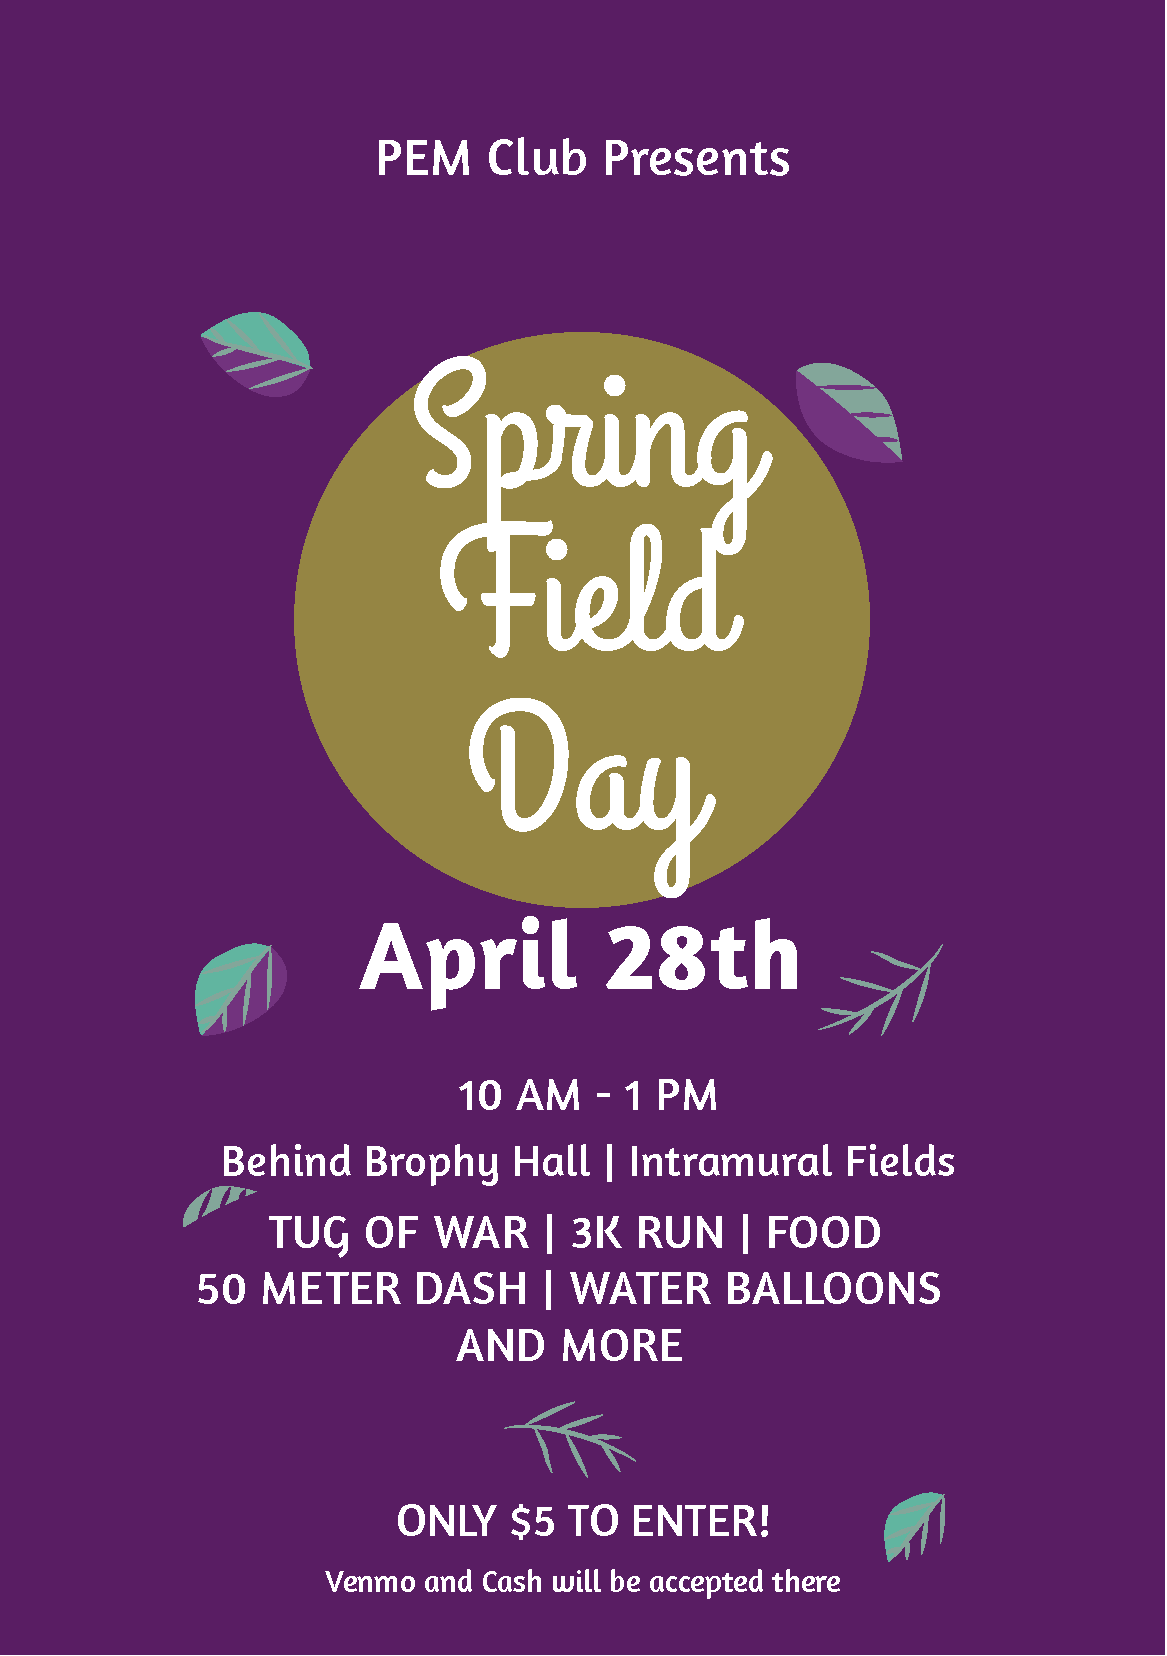 PEM Club Spring Field Day image